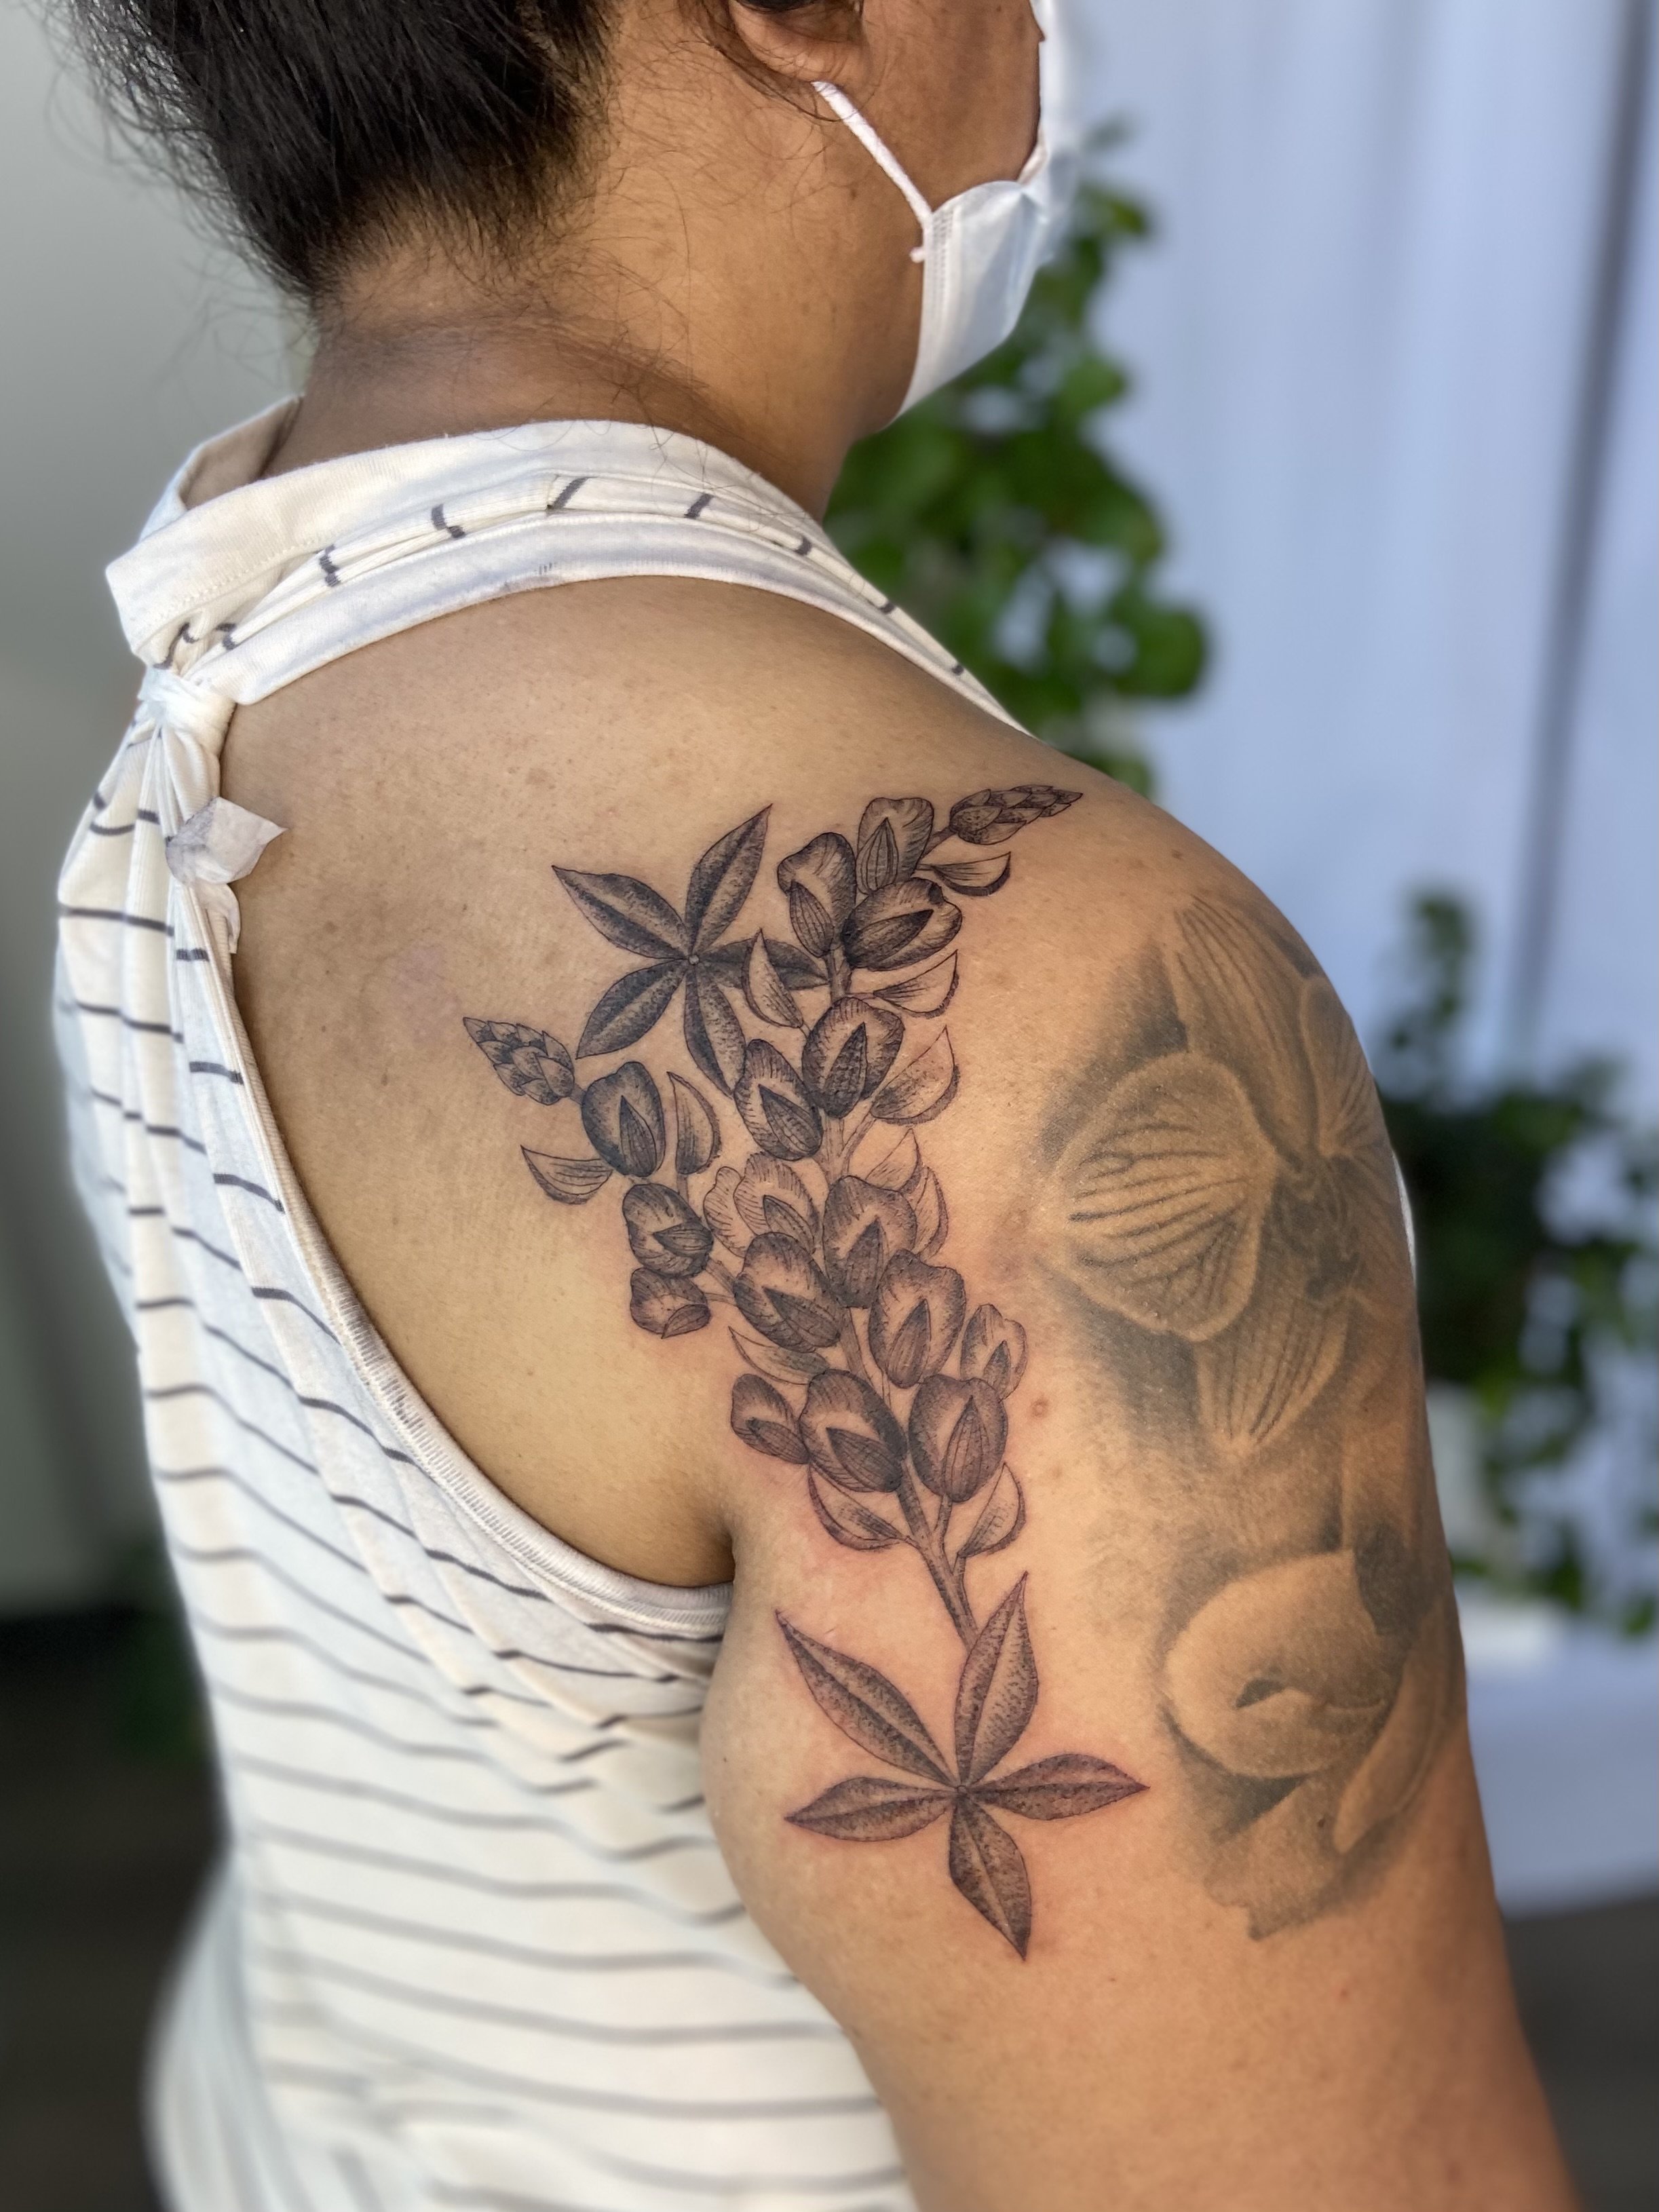 SOKO HOSHIMI — Icon Tattoo